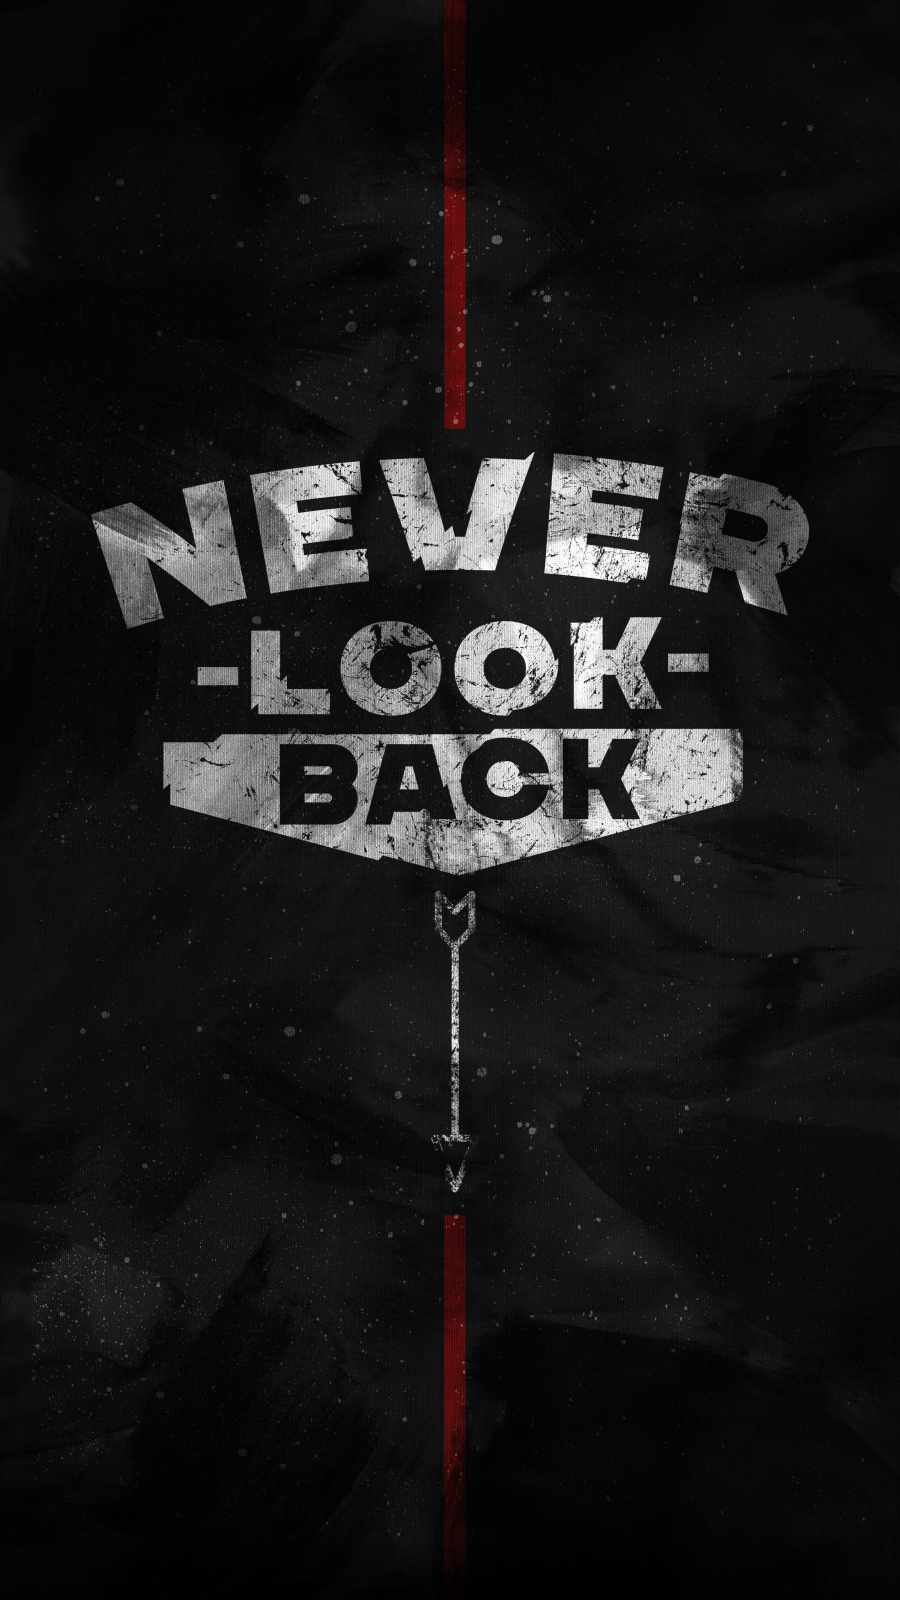 Never Look Back iPhone Wallpaper